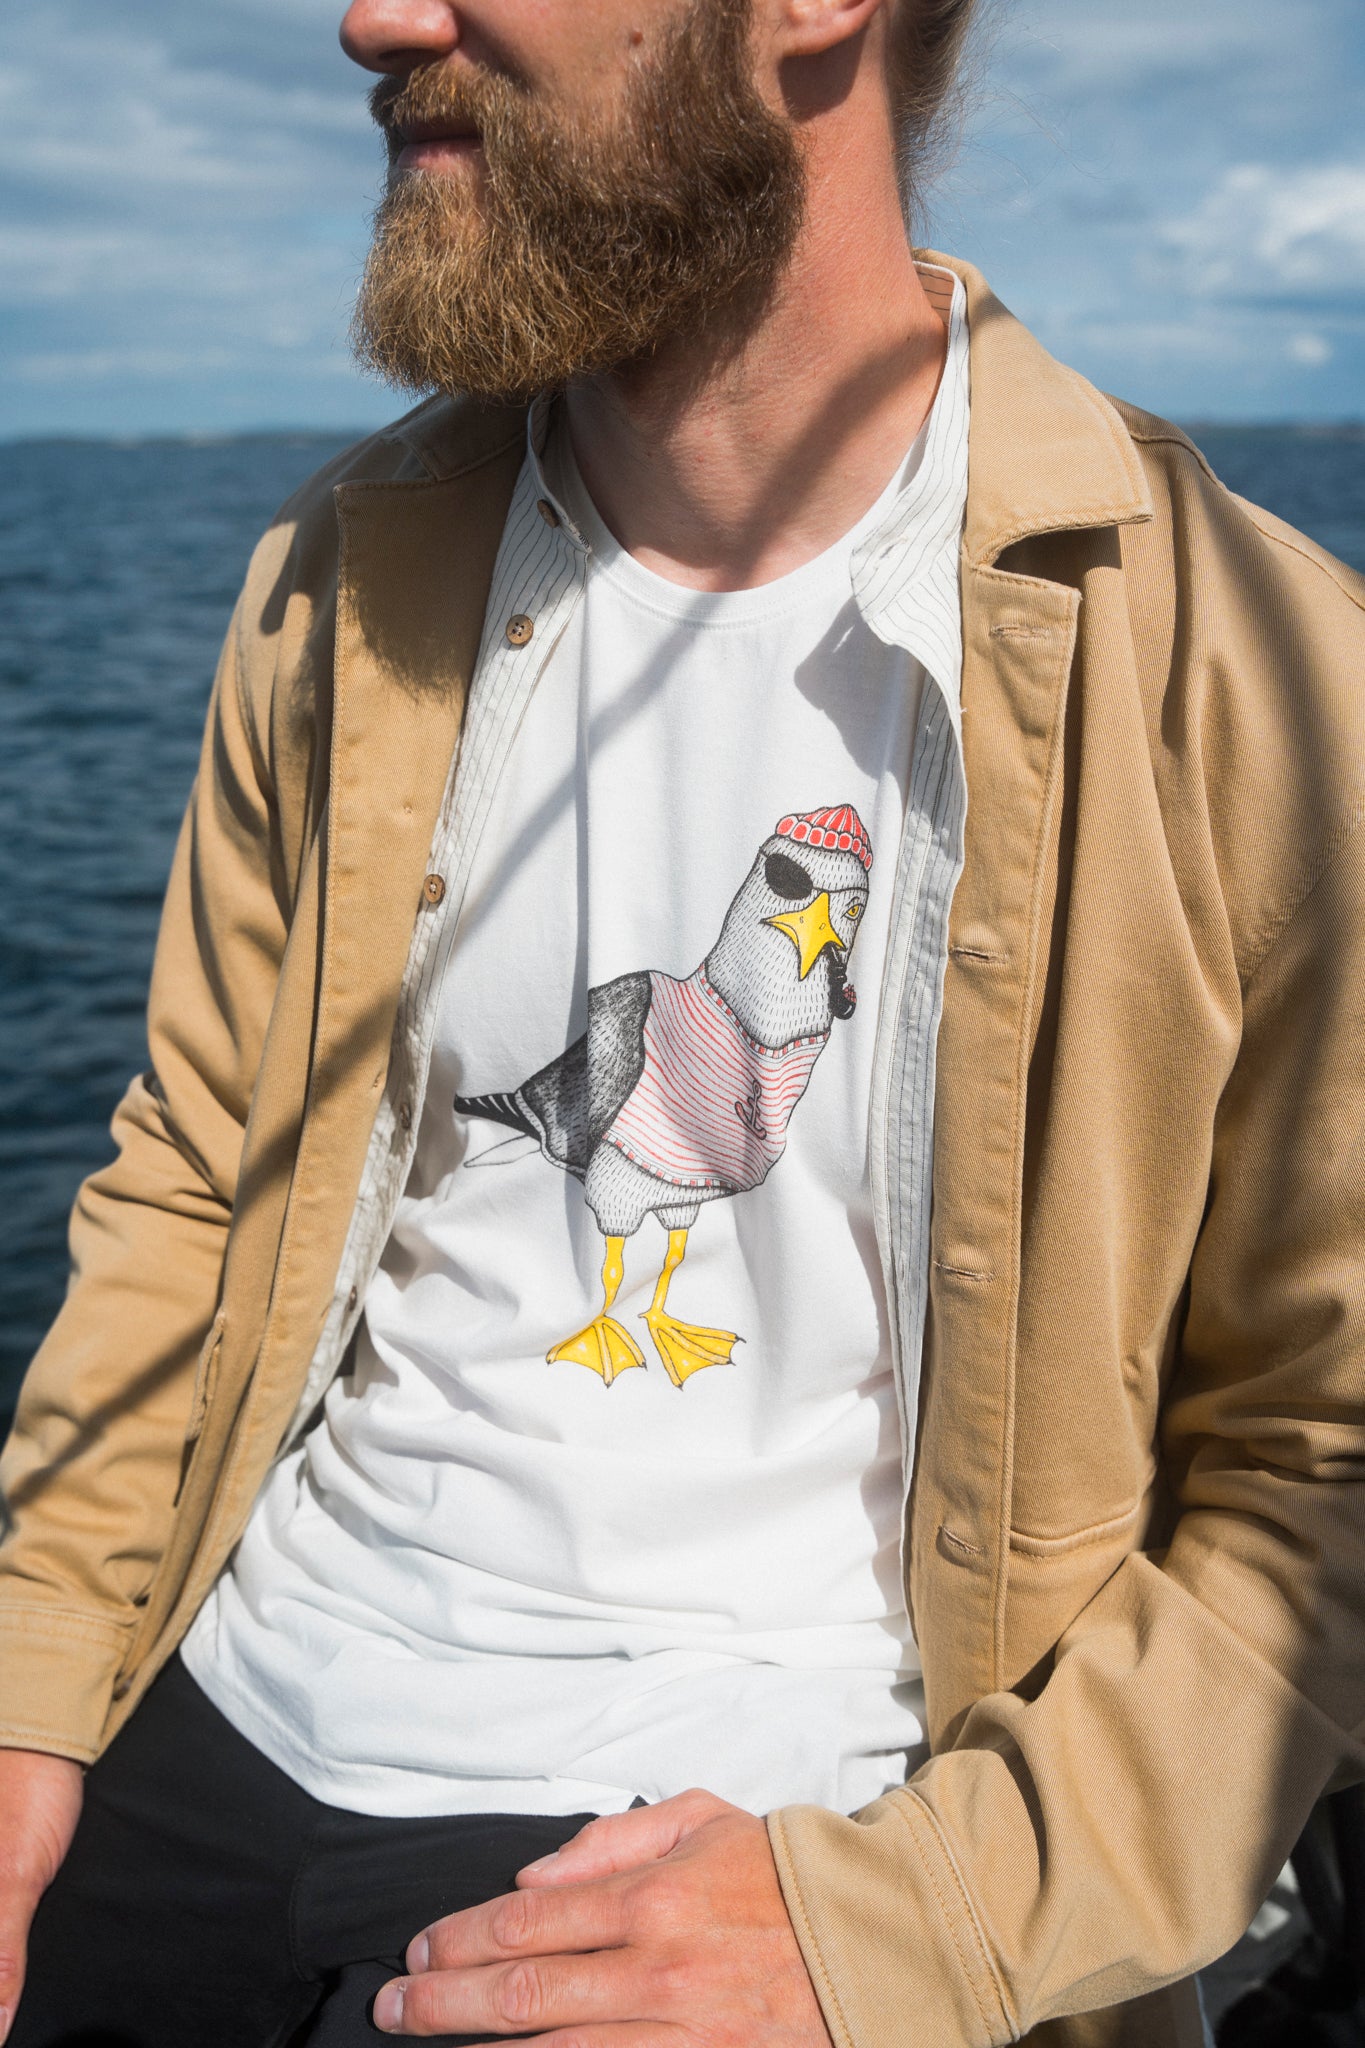 Seaborn Seagull T-shirt (Star White)